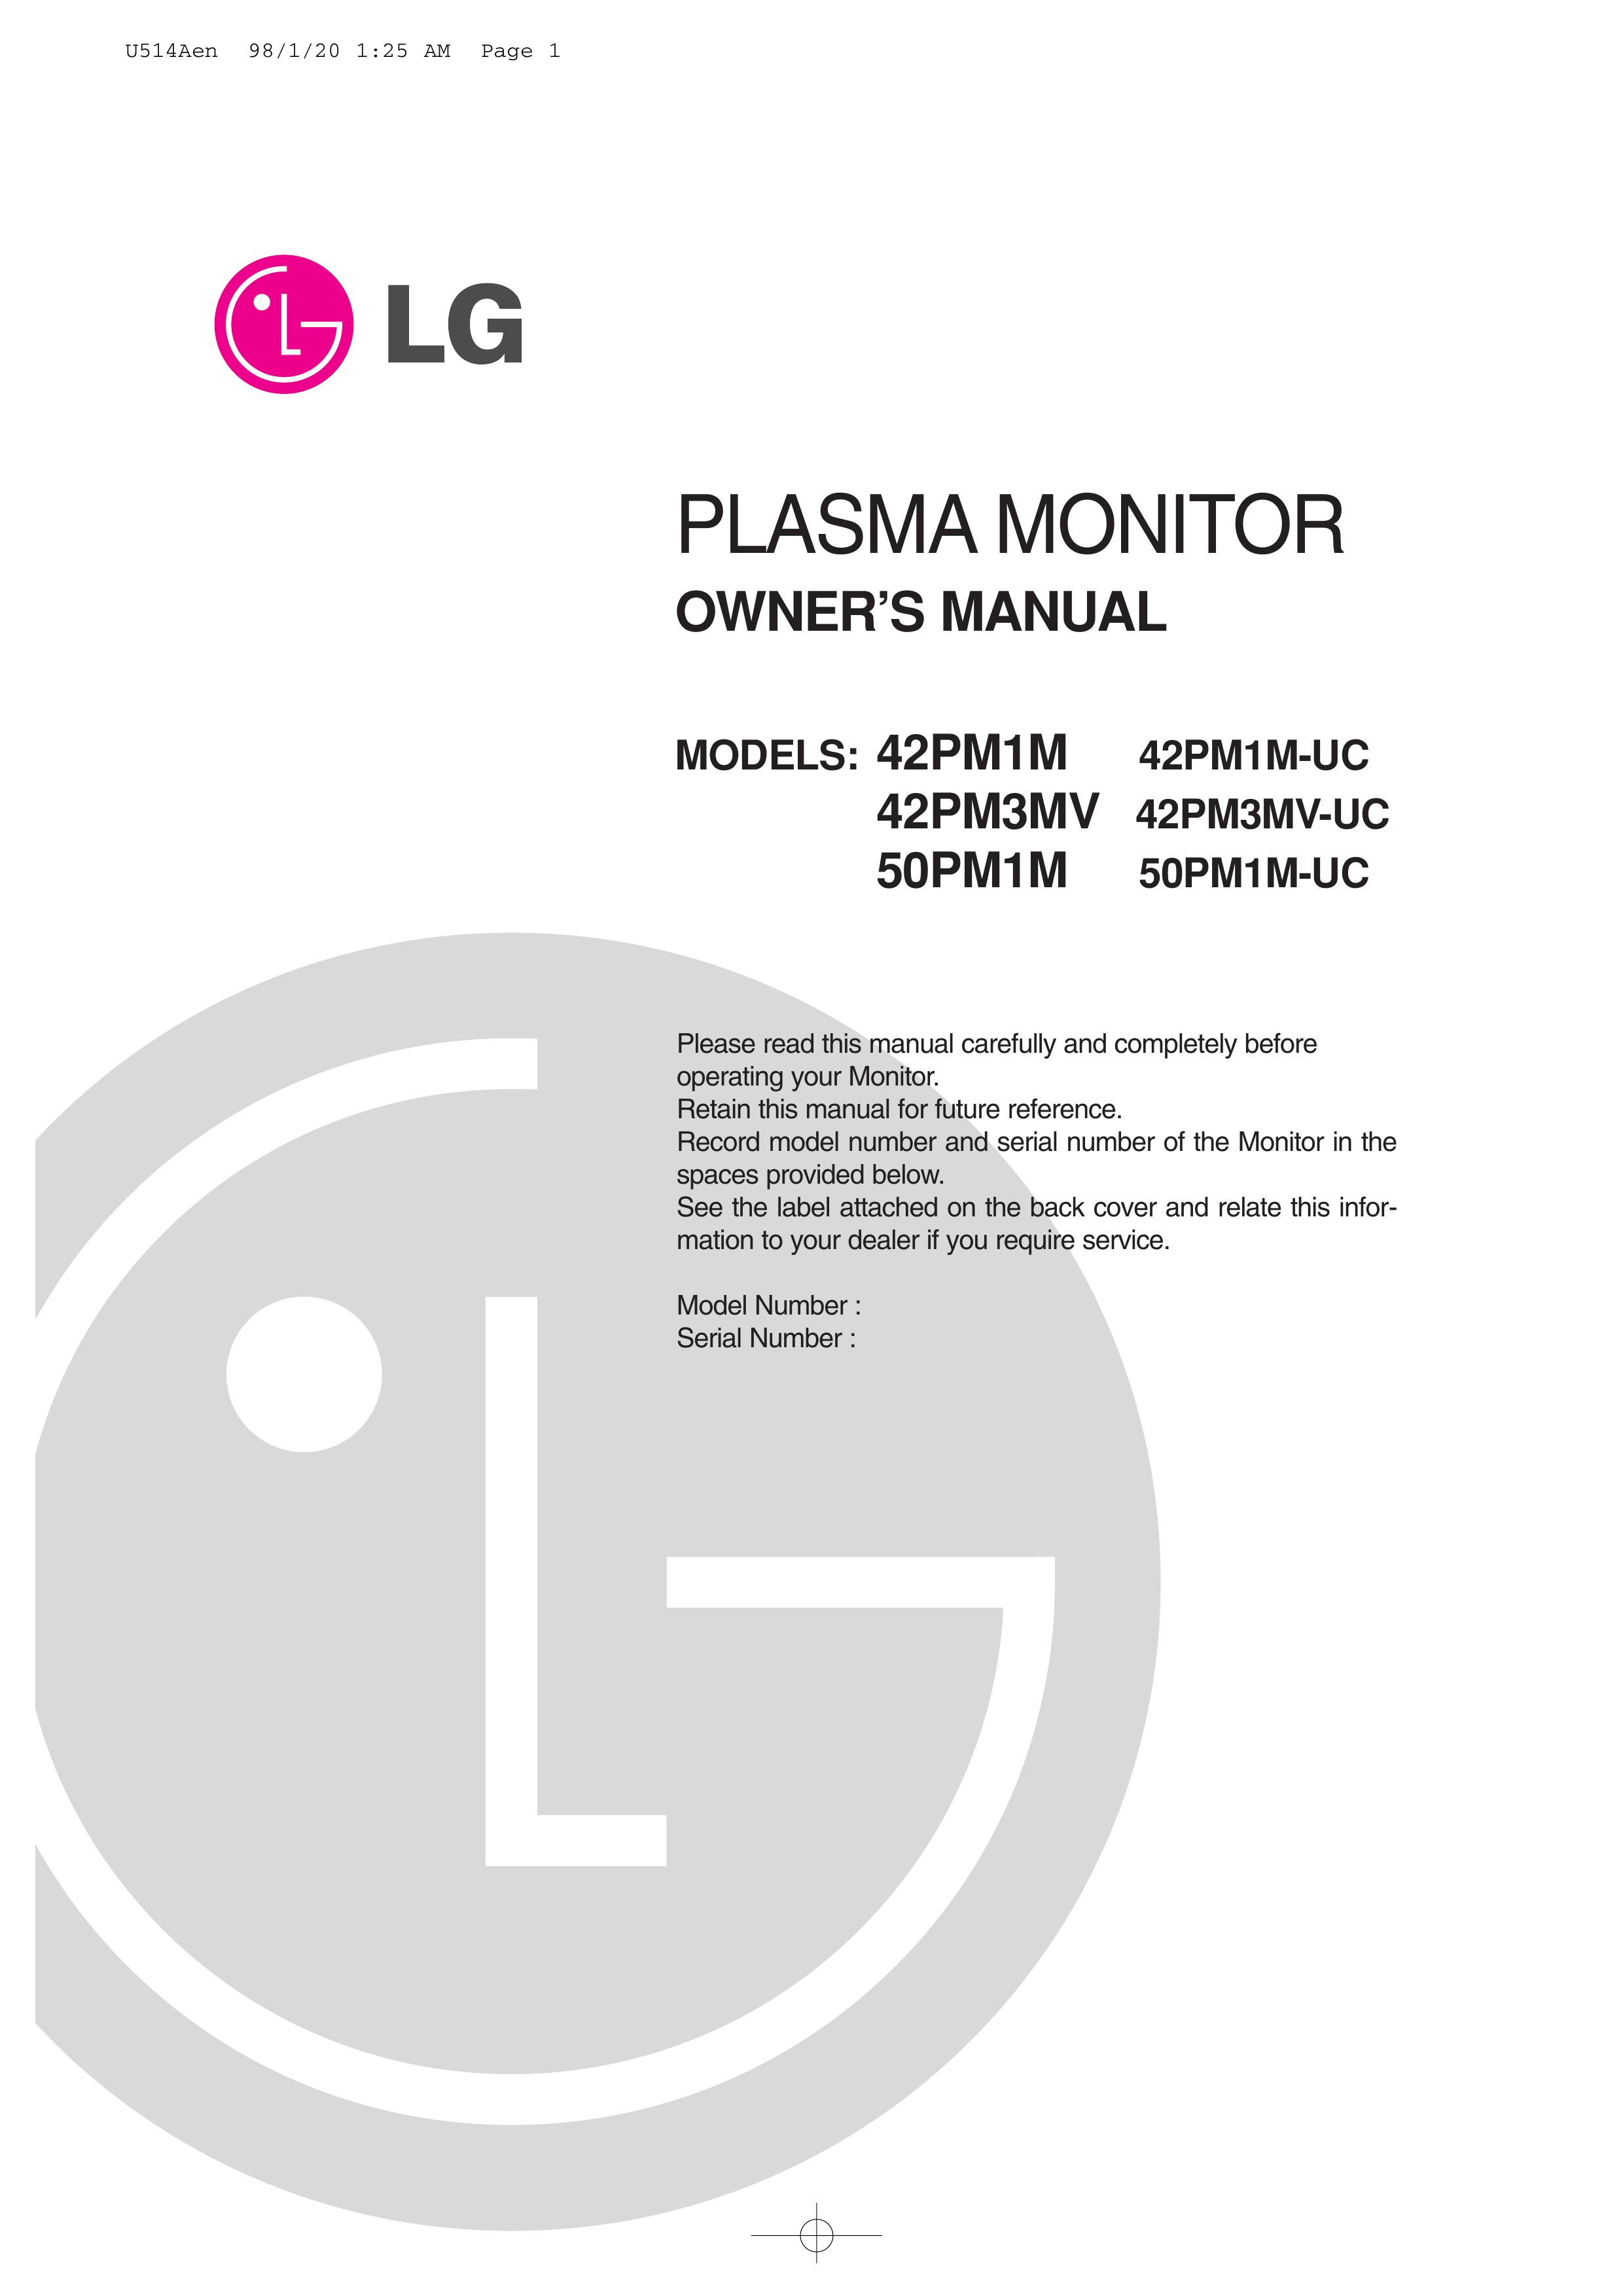 LG Electronics 50PM1M-UC Marine Instruments User Manual